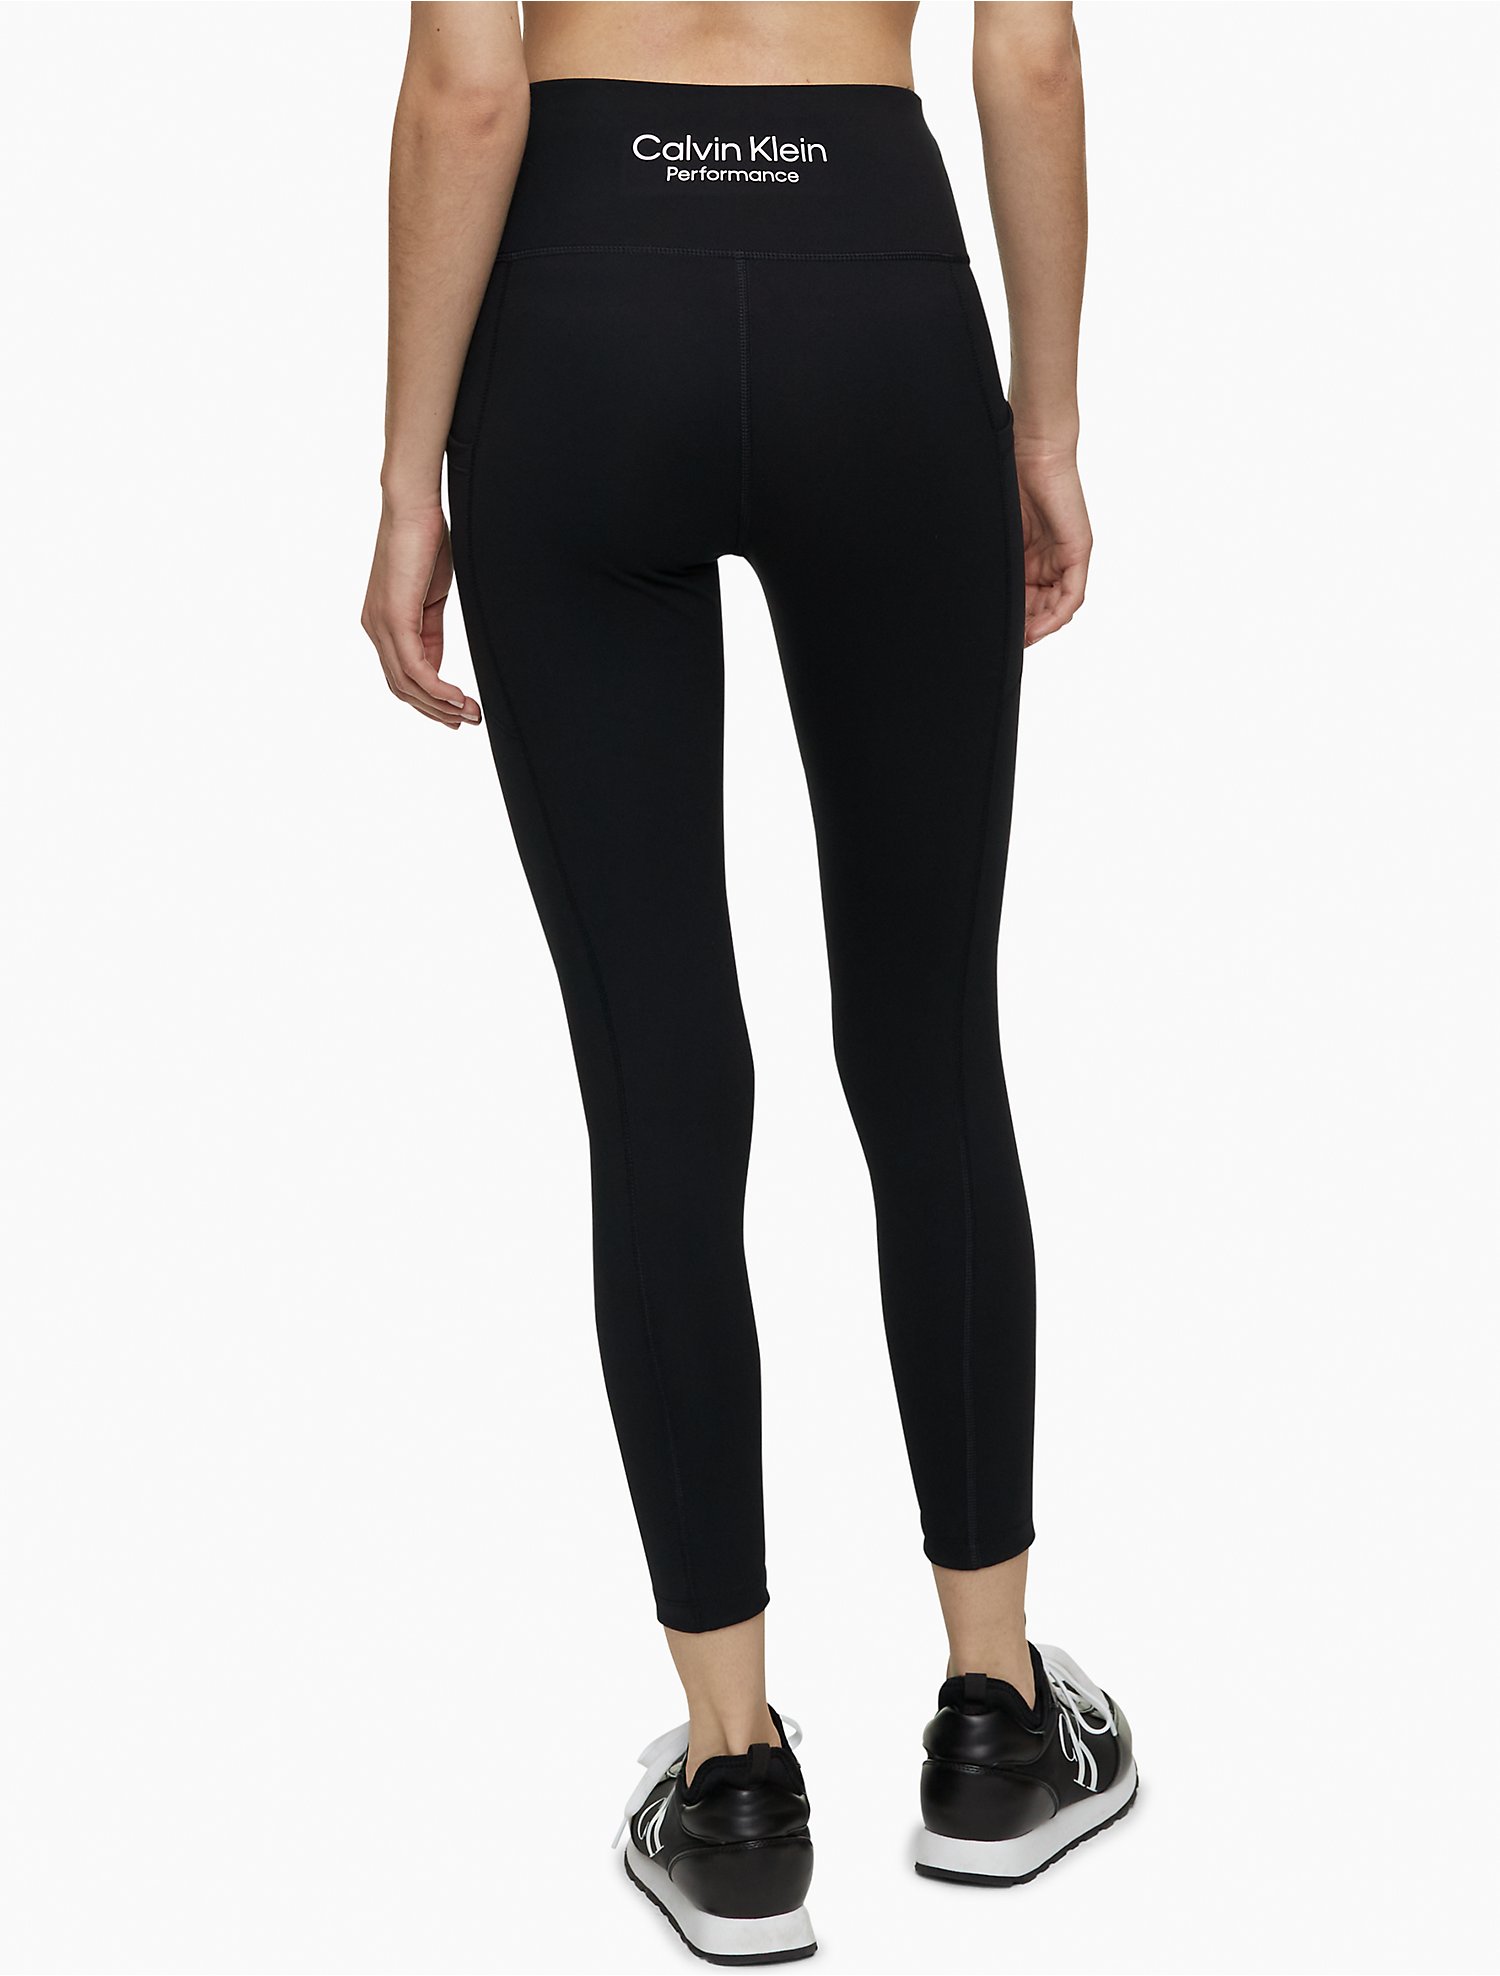 Calvin Klein High Waist 7/8 Legging, Black - Activewear